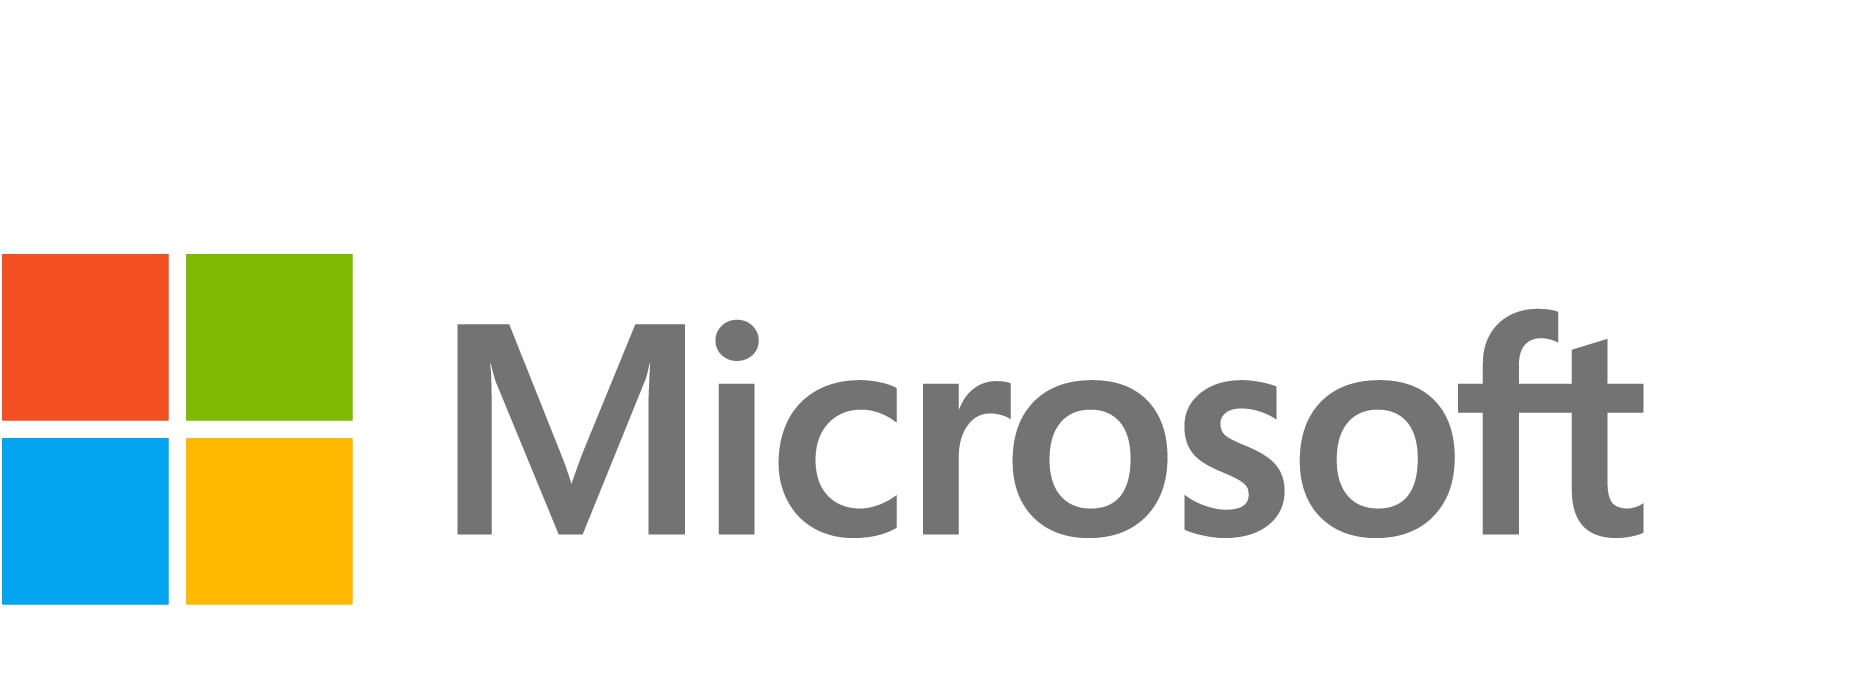 Microsoft Enterprise CAL Suite - software assurance - 1 user CAL